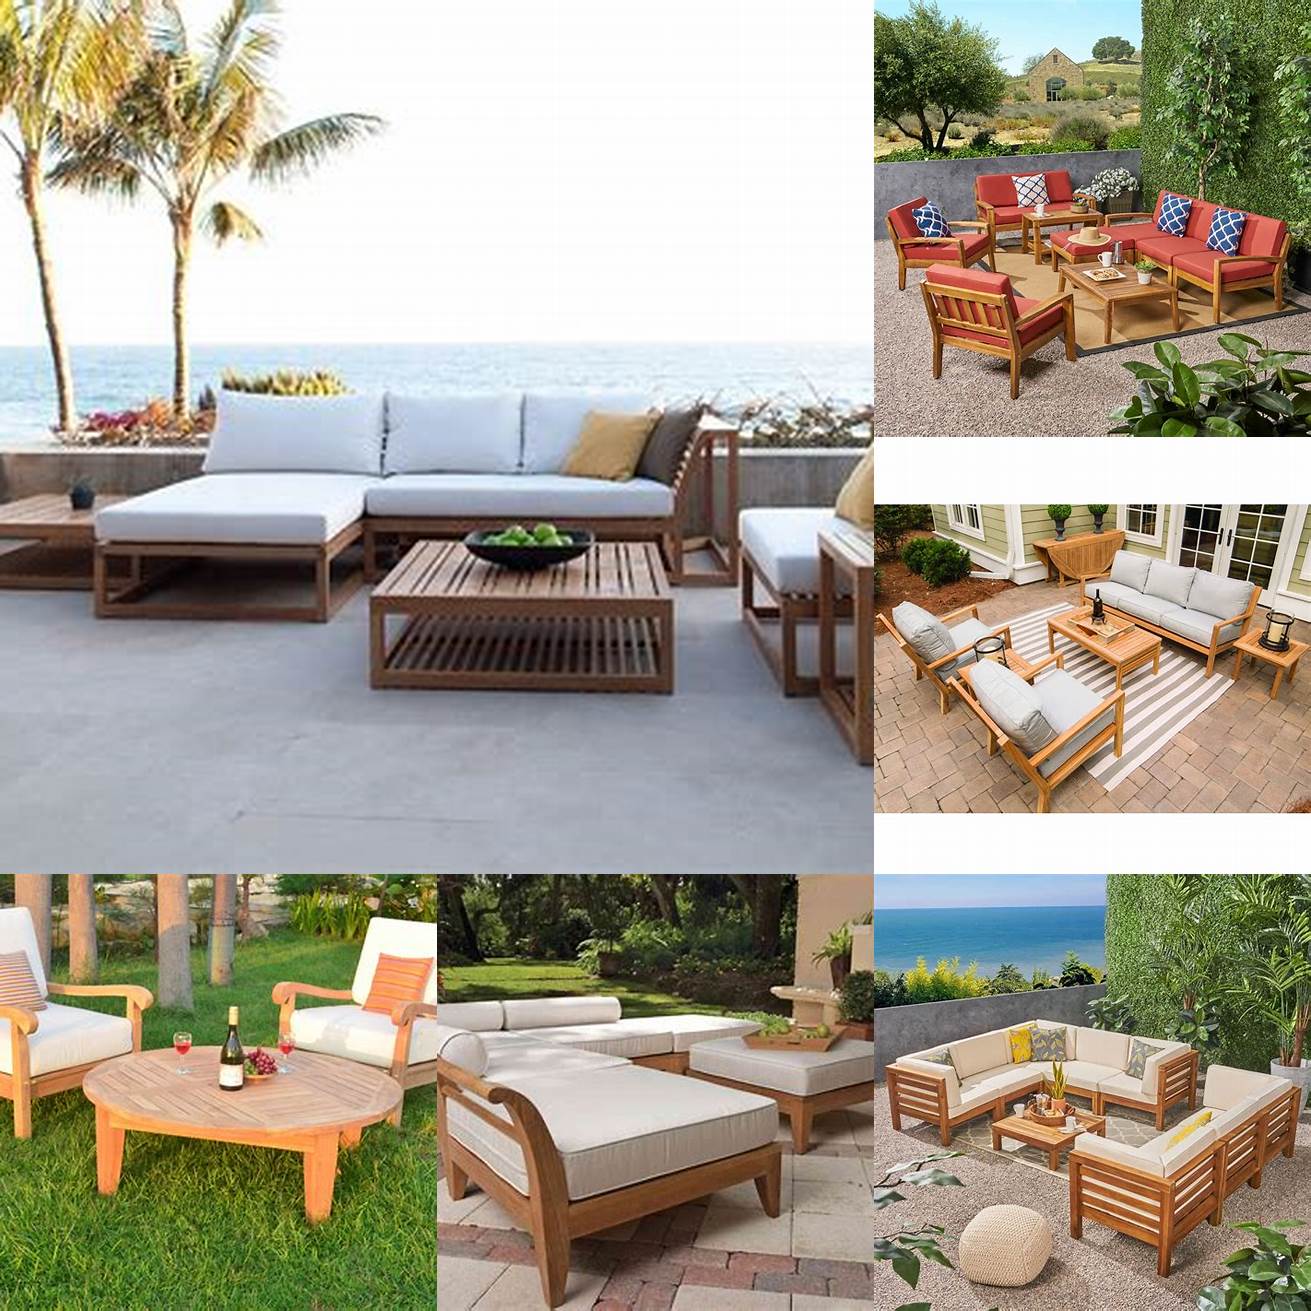 A teak platform outdoor furniture set on a terrace